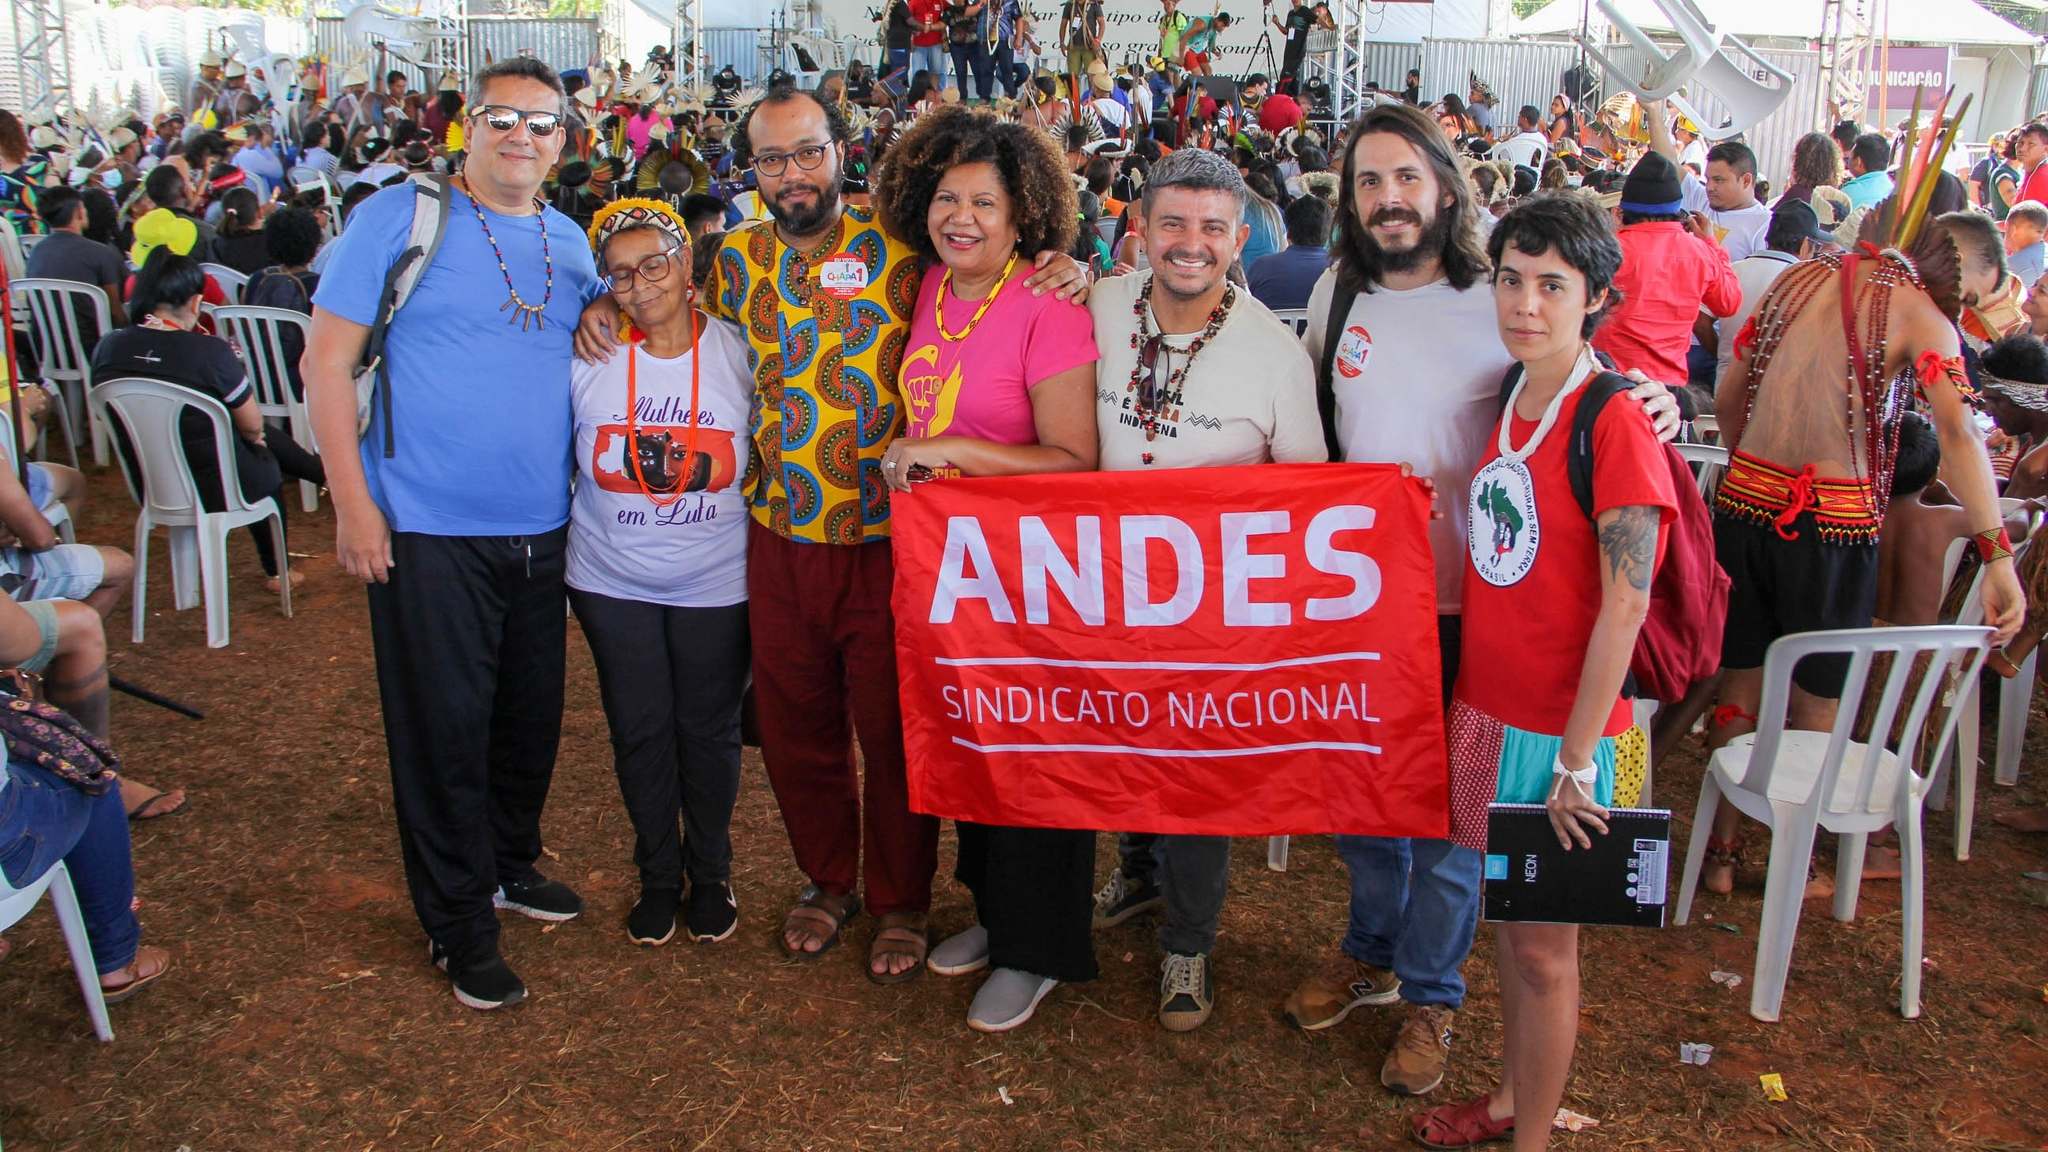 ANDES-SN participa do Acampamento Terra Livre, maior assembleia dos povos indígenas no país